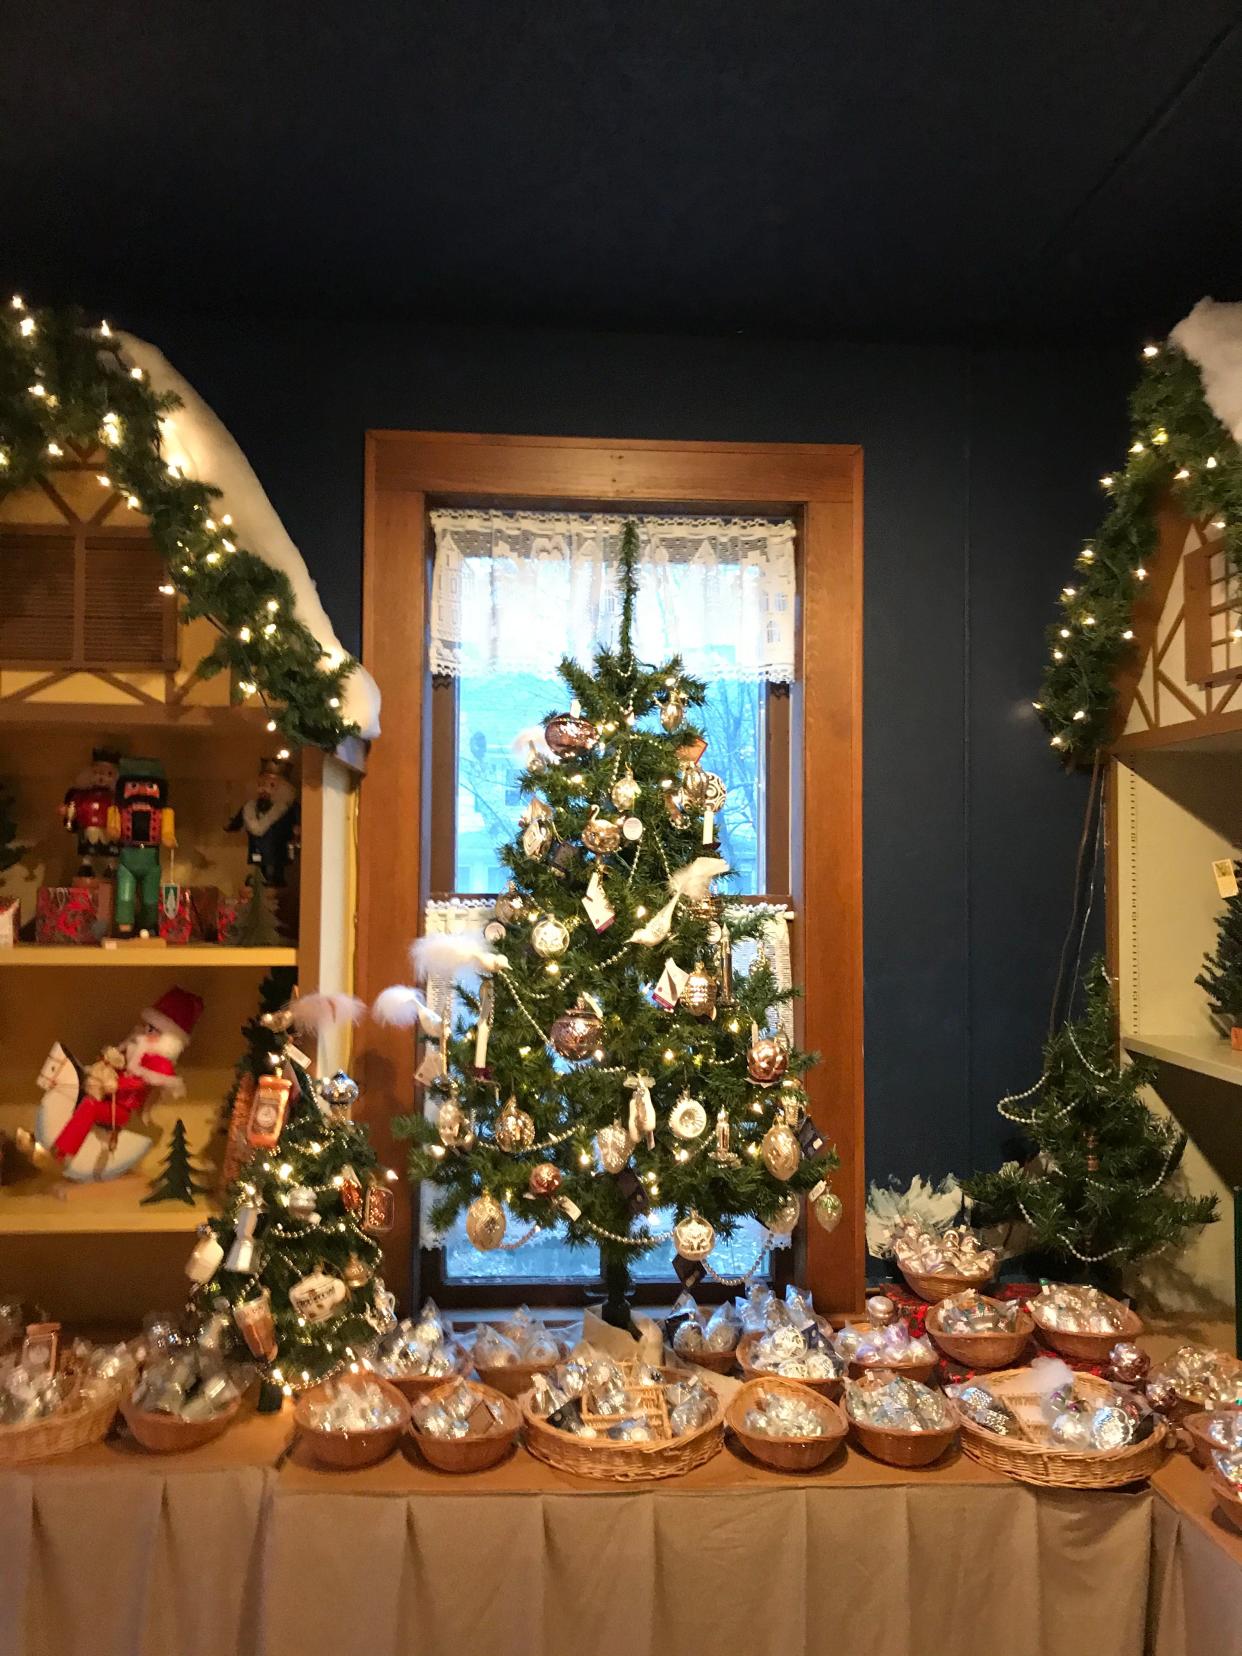 After 31 years in business, Germantown's Sinter Klausen Christmas Markt — a fixture on Main Street in Germantown — closed after the 2019 Christmas season.